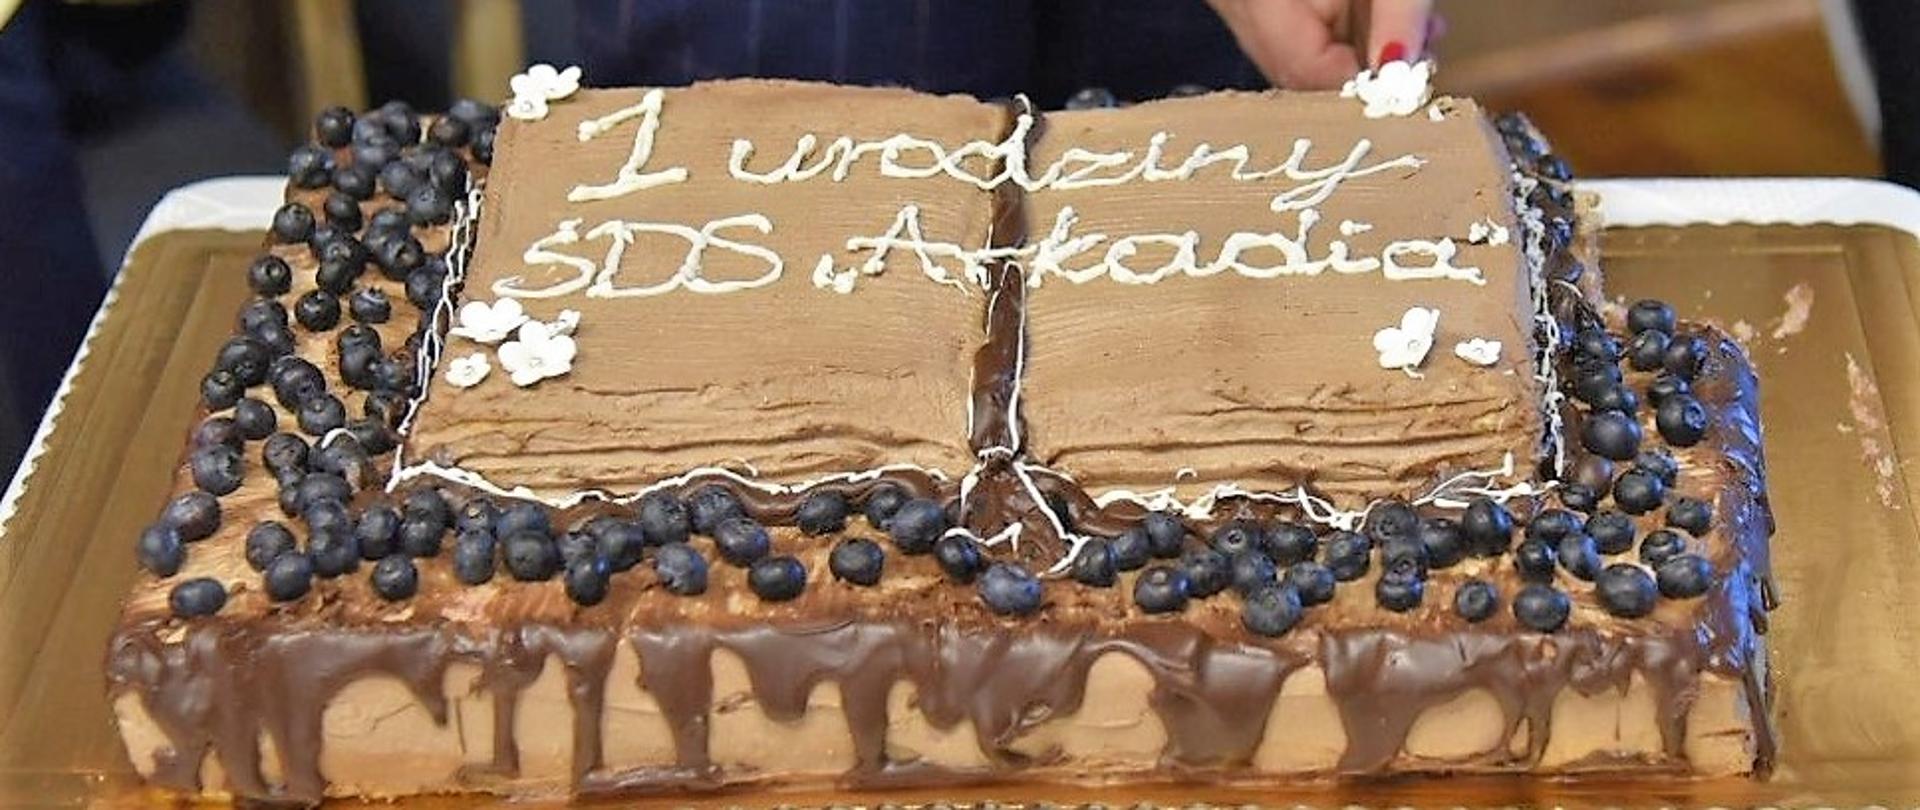 Tort z napisem 1 urodziny ŚDS Arkadia 